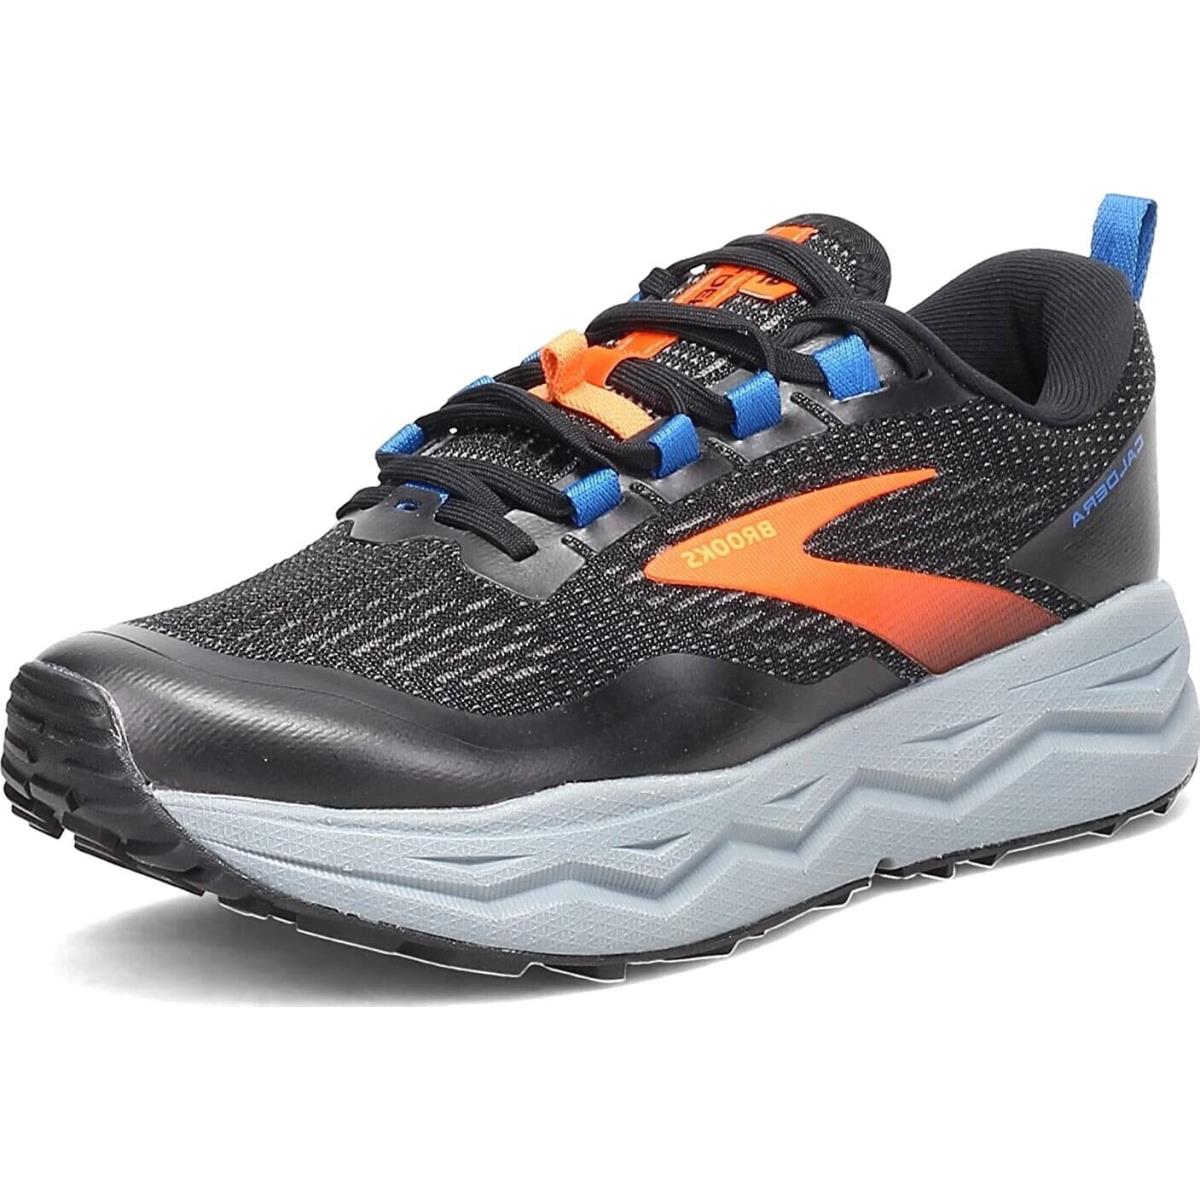 Brooks Caldera 5 Mens Athletic Shoe Running Sneaker Black/orange US 12M - Black/Orange